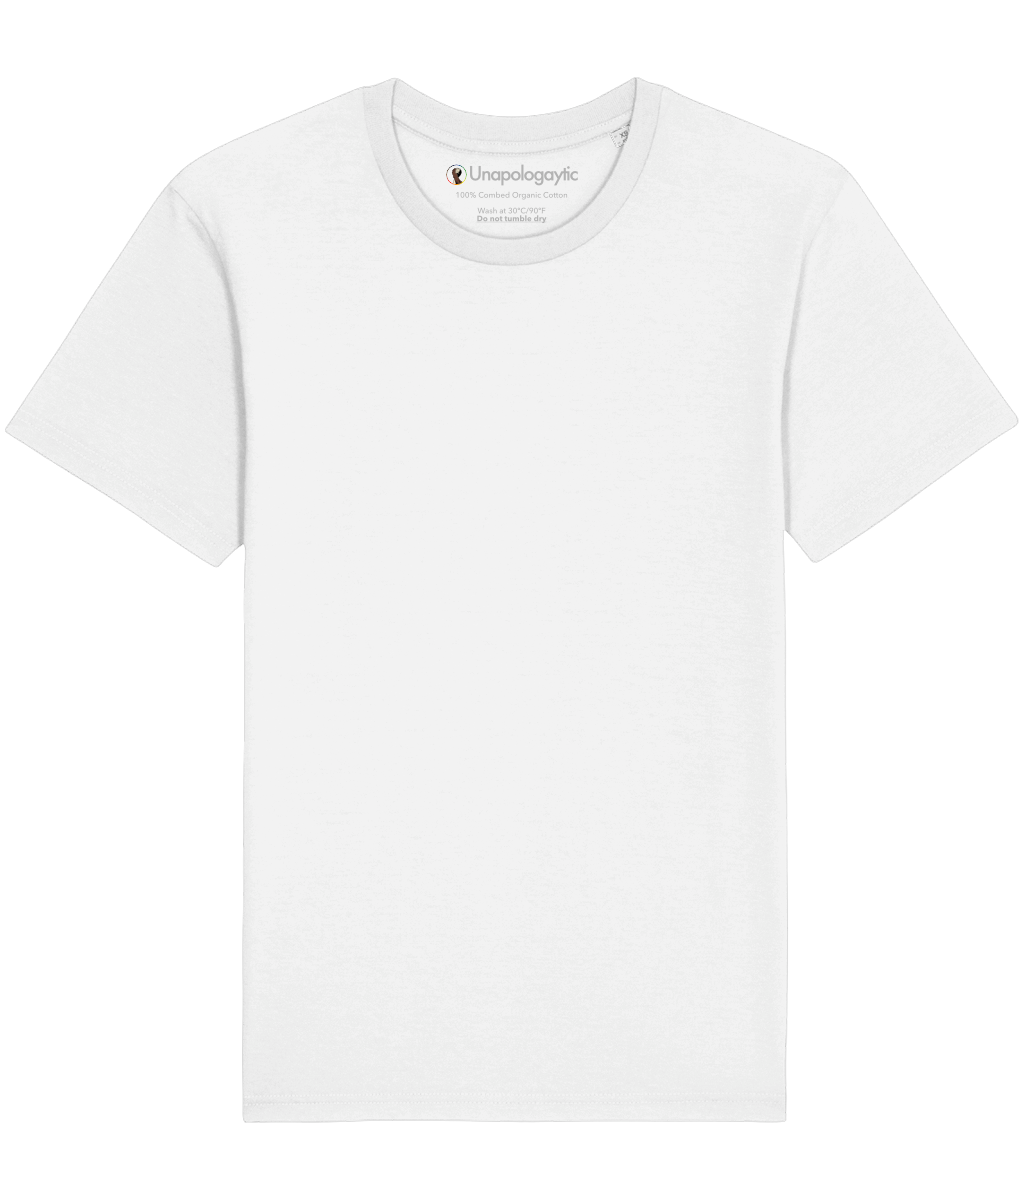 Our Essentials Organic Cotton T-shirt